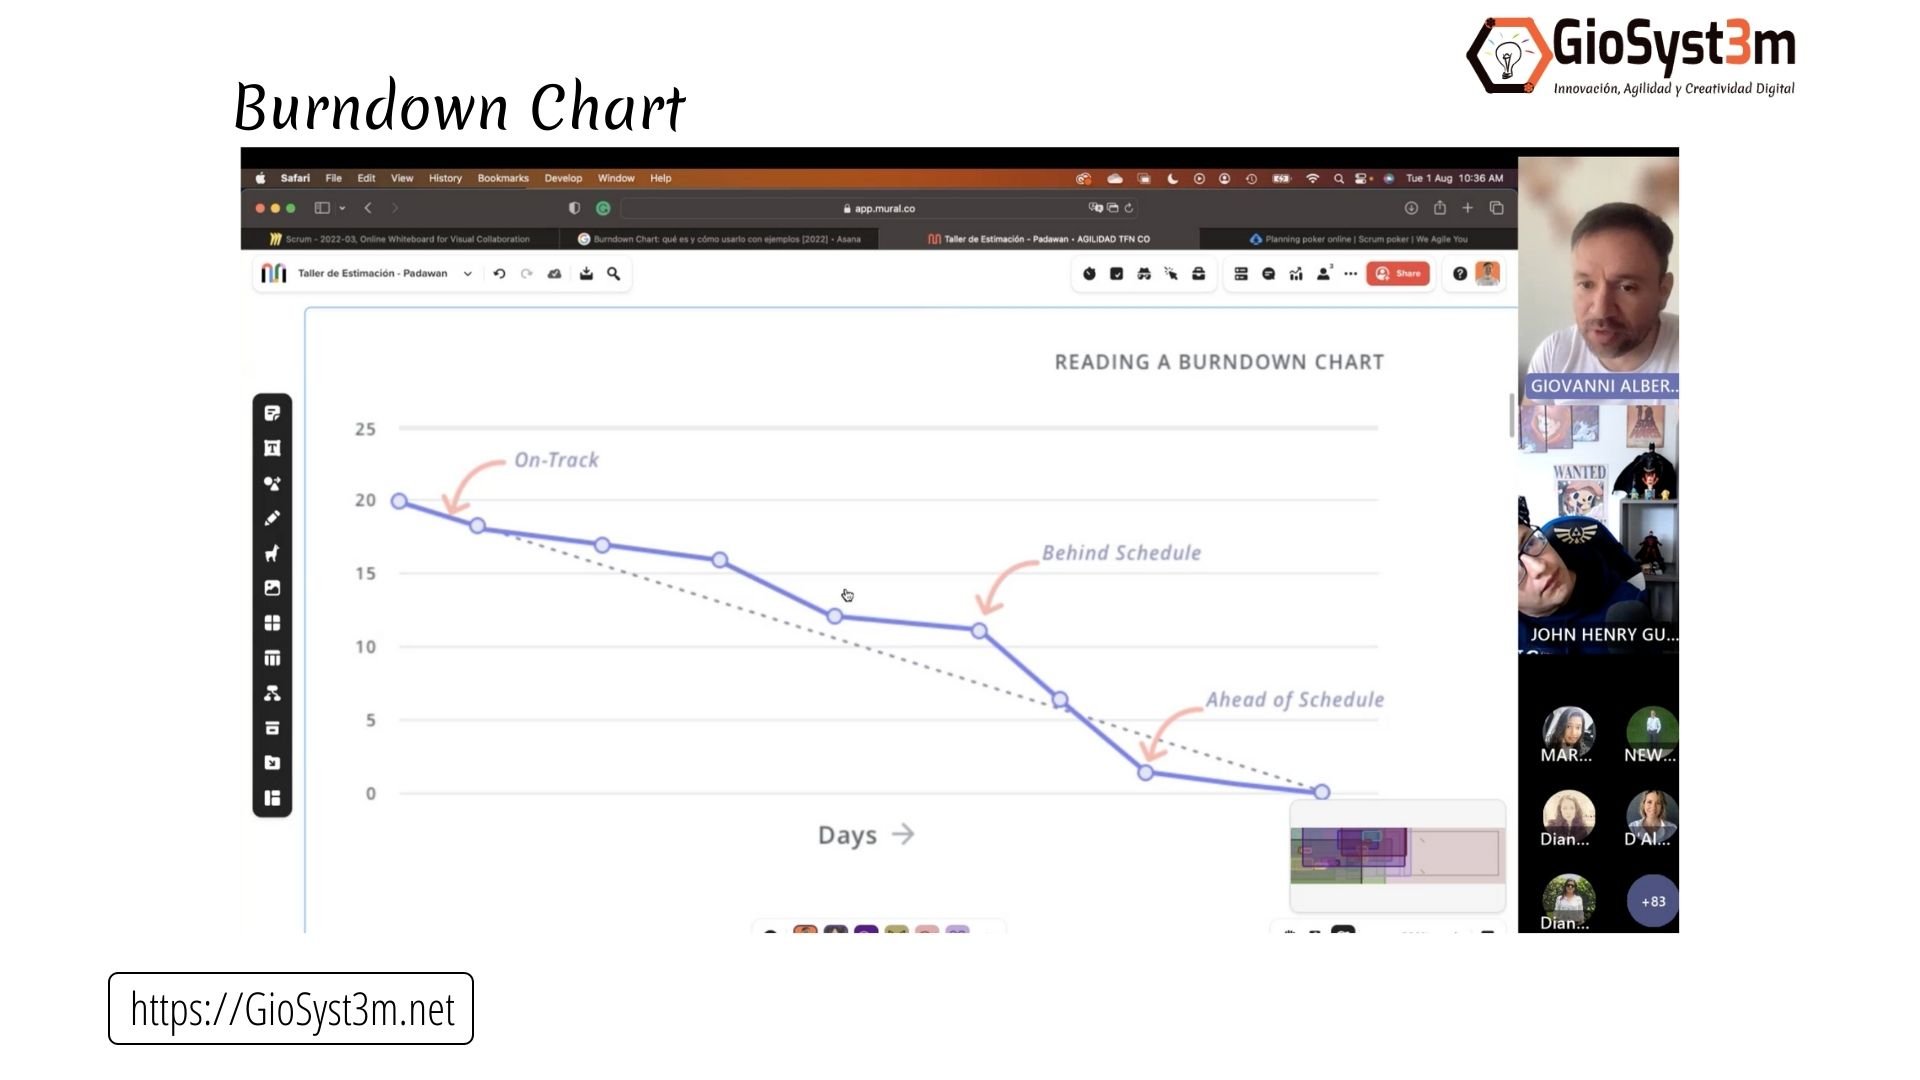 Daily, Turndown Chart - GioSyst3m